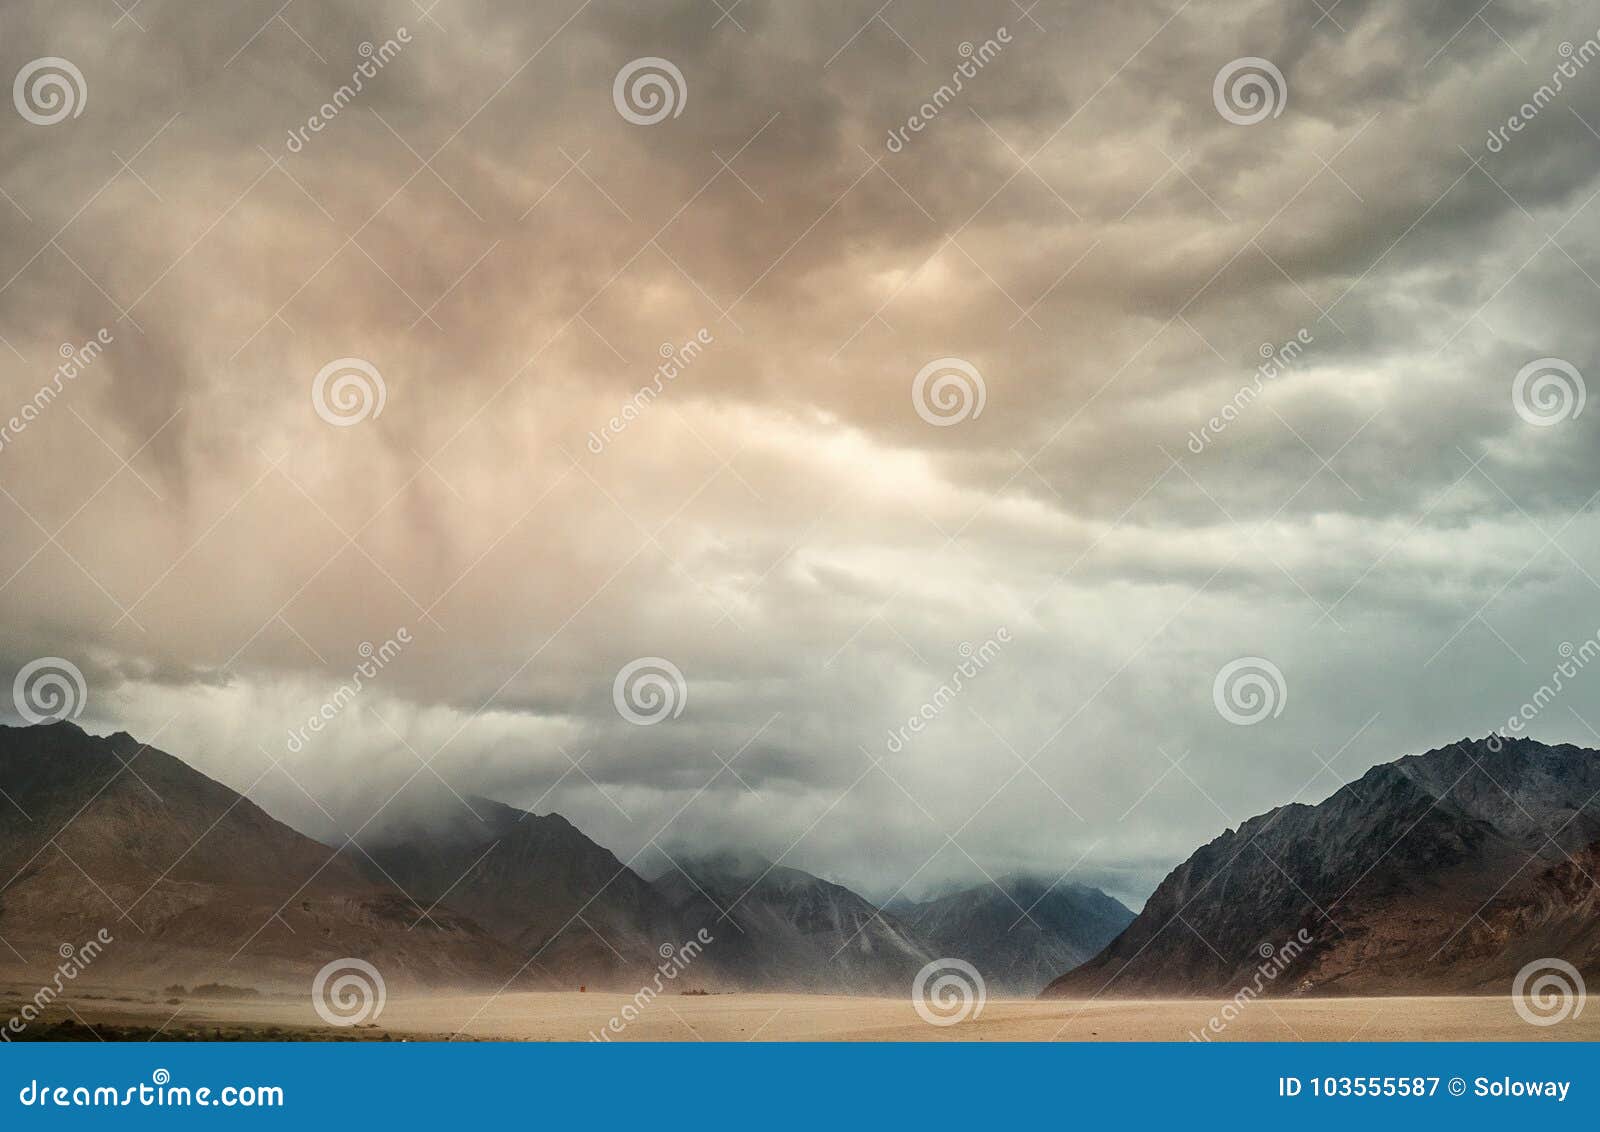 sand storm in nubra valley, jammu and kashmir, leh, india